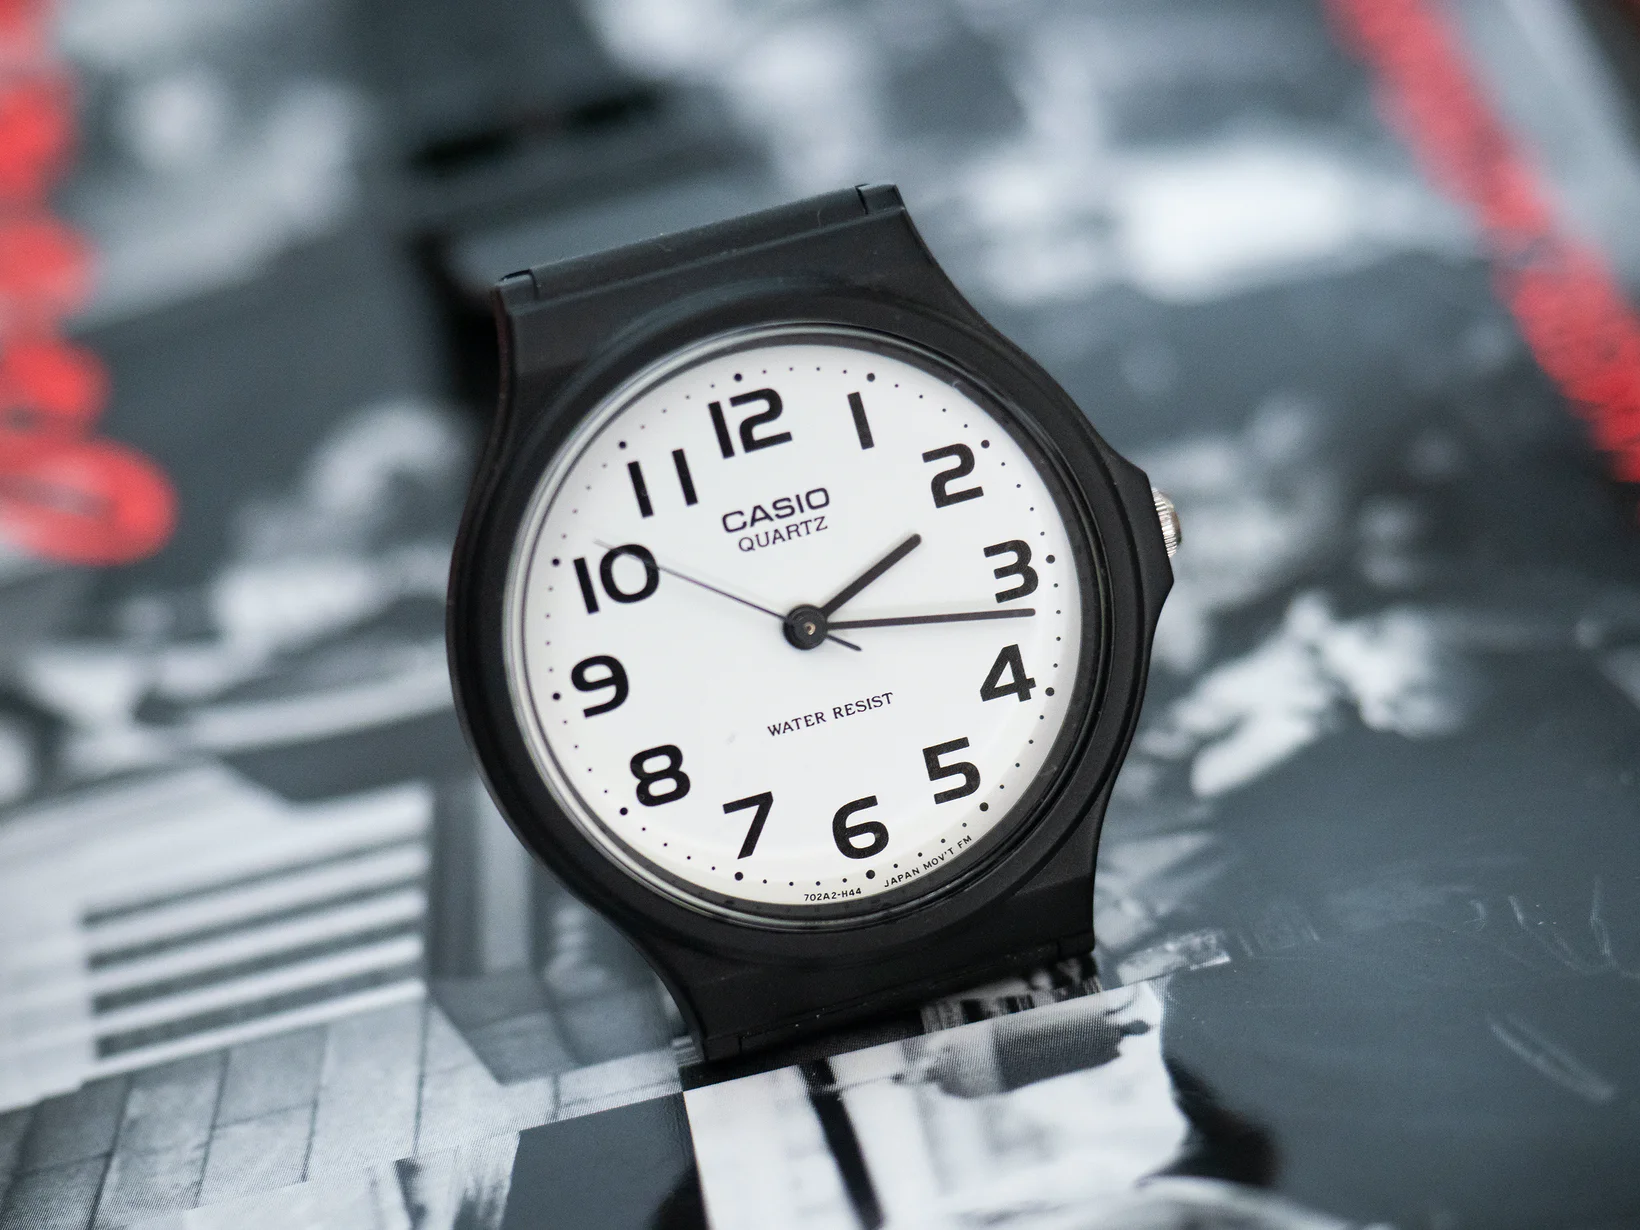 sigaret Rondsel Verzoekschrift Casio Quartz watches - Fonts In Use